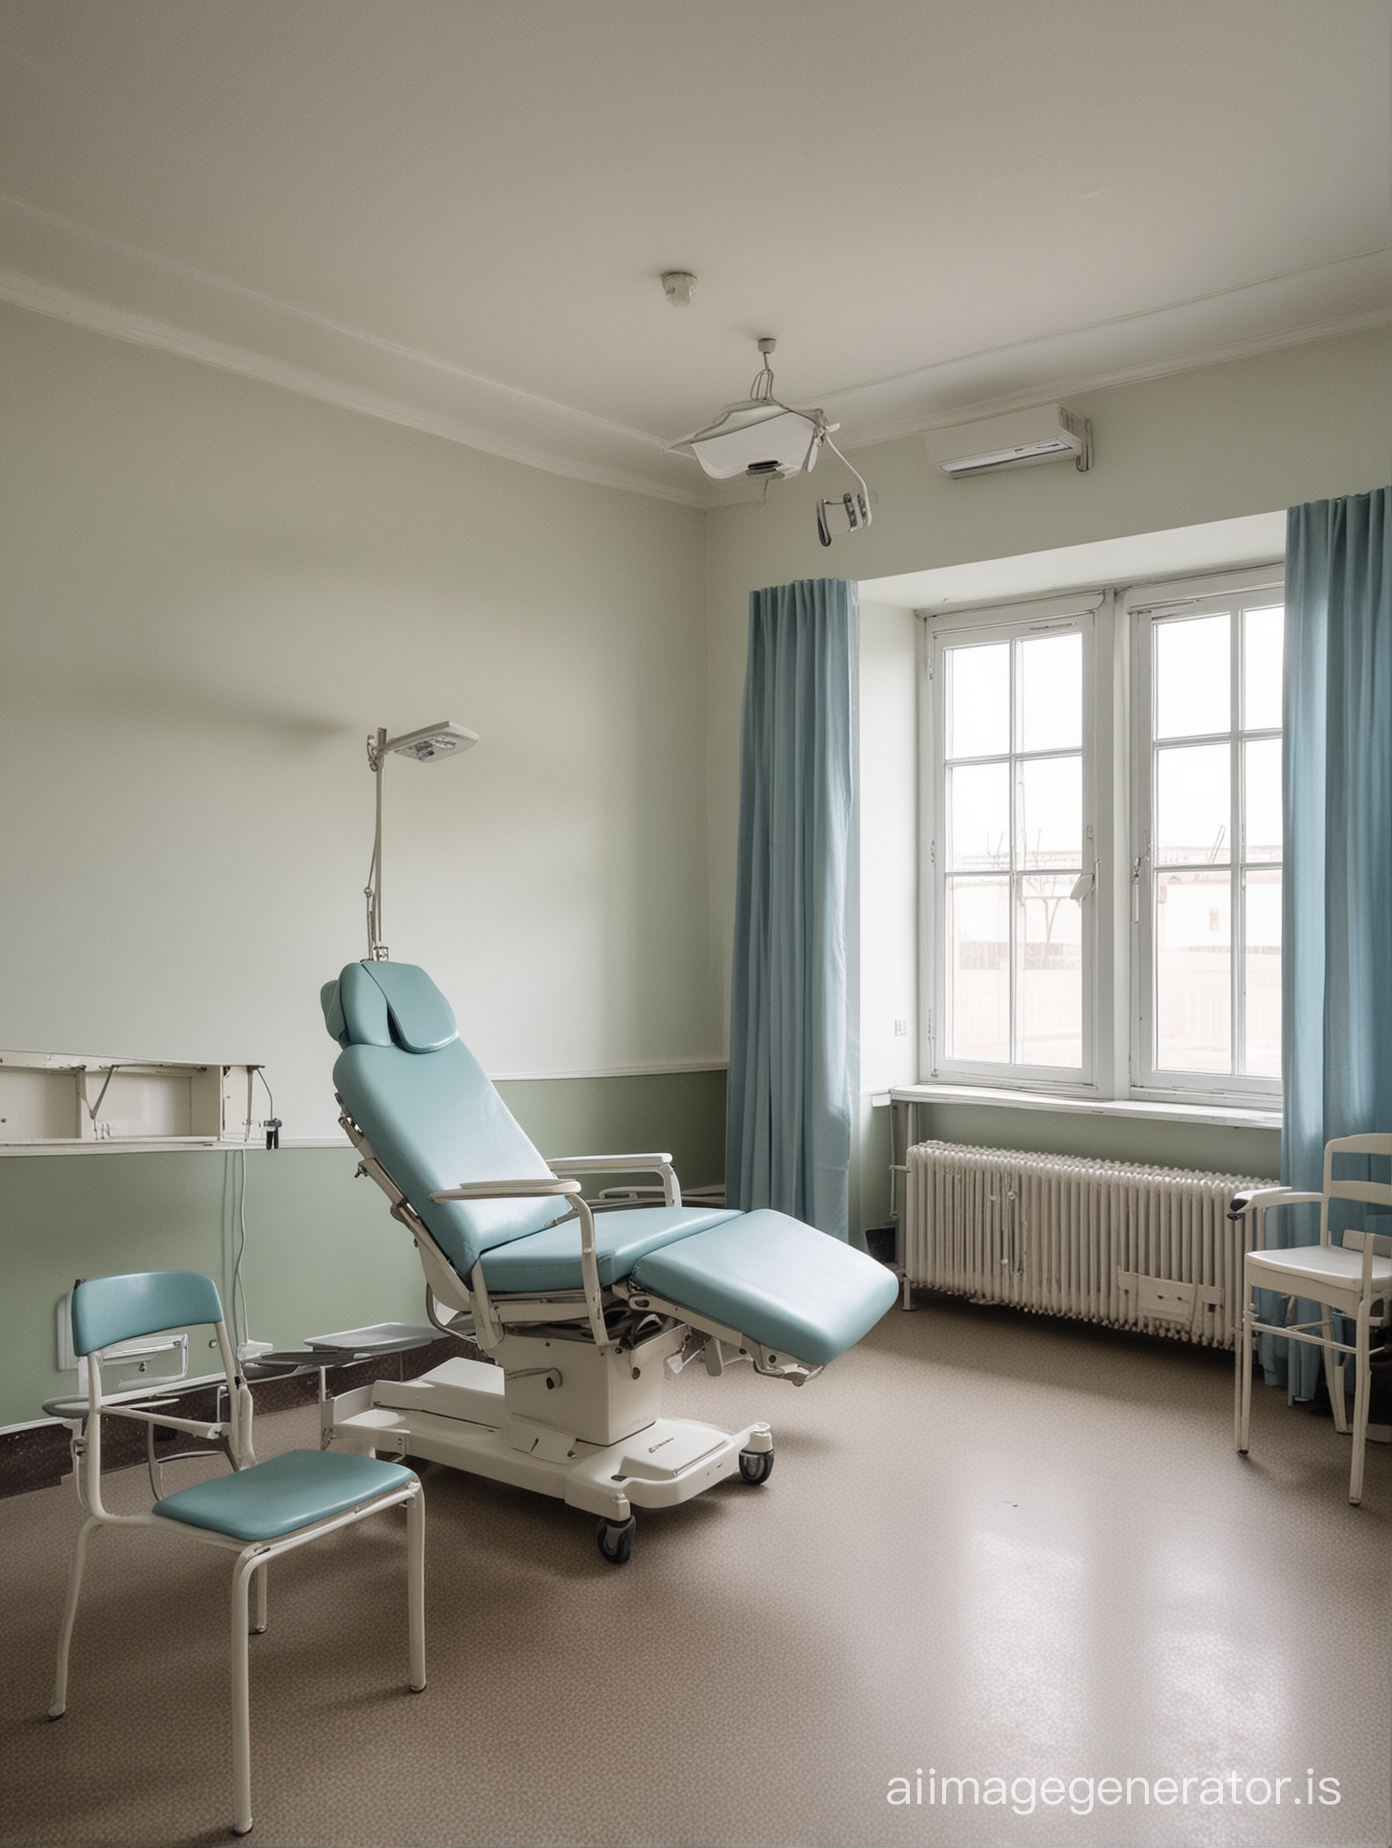 Psychiatric hospital ward with gynecological chair